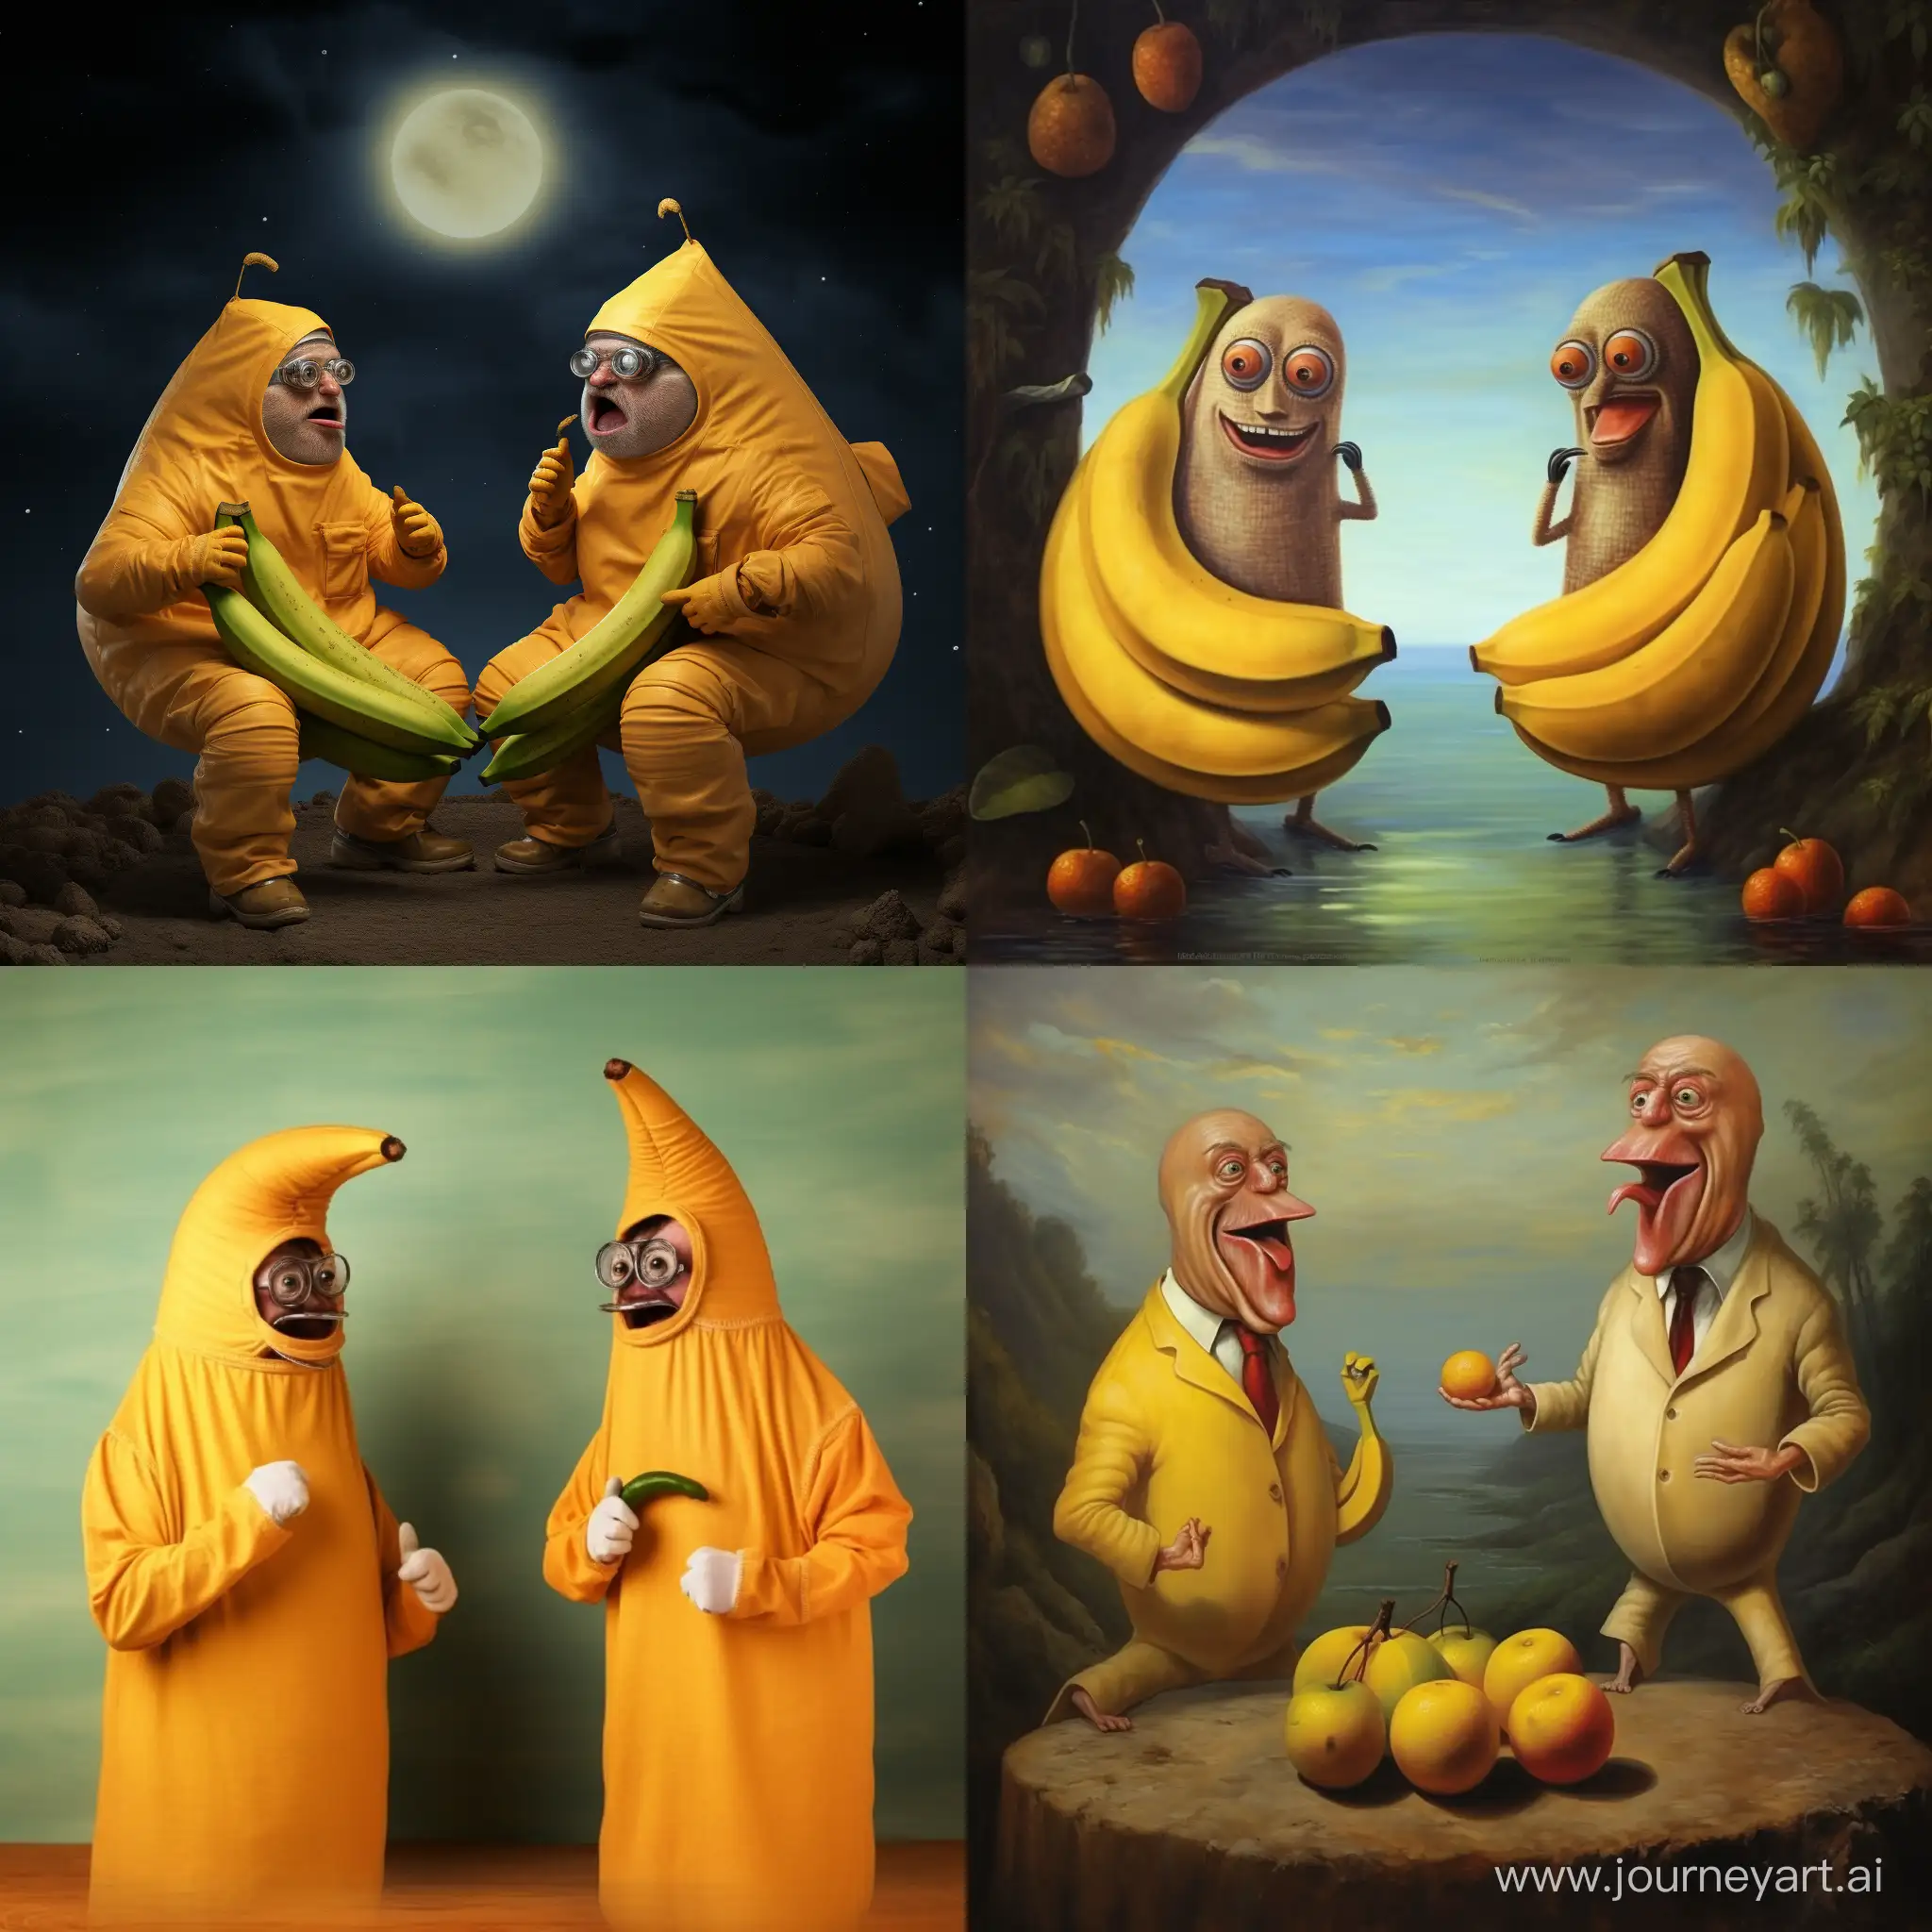 Philosophical-Bananas-Engage-in-Existential-Debates